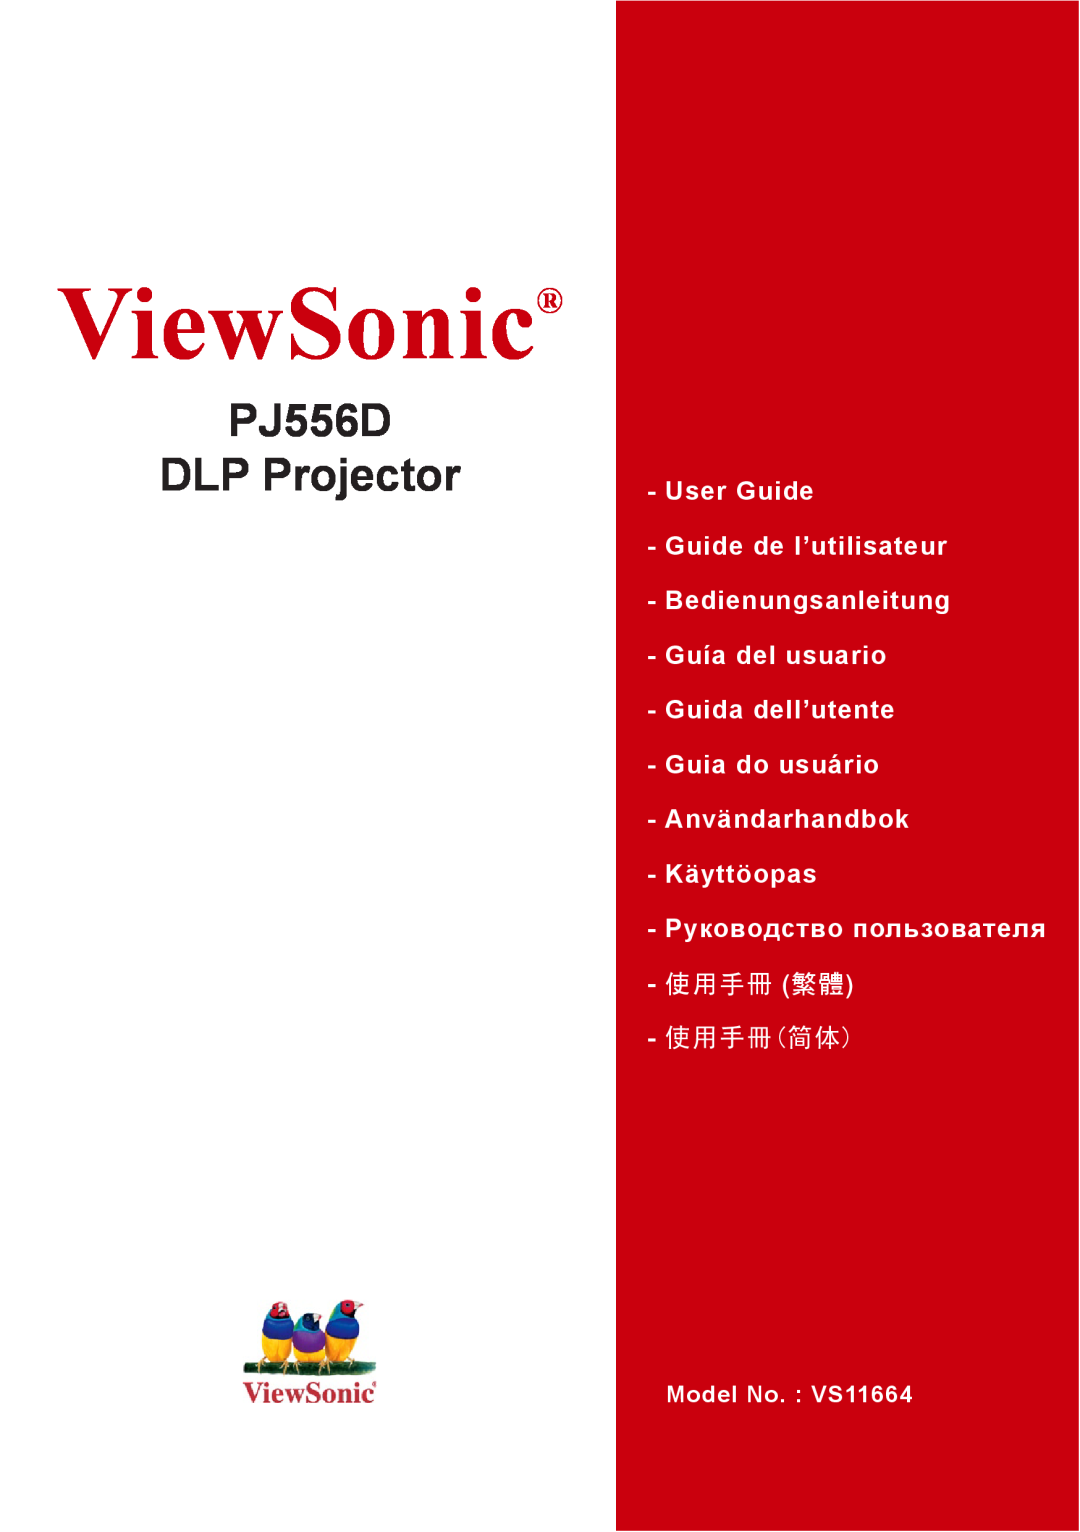 ViewSonic manual ViewSonic, PJ556D DLP Projector, User Guide Guide de l’utilisateur Bedienungsanleitung, 使用手冊 繁體 